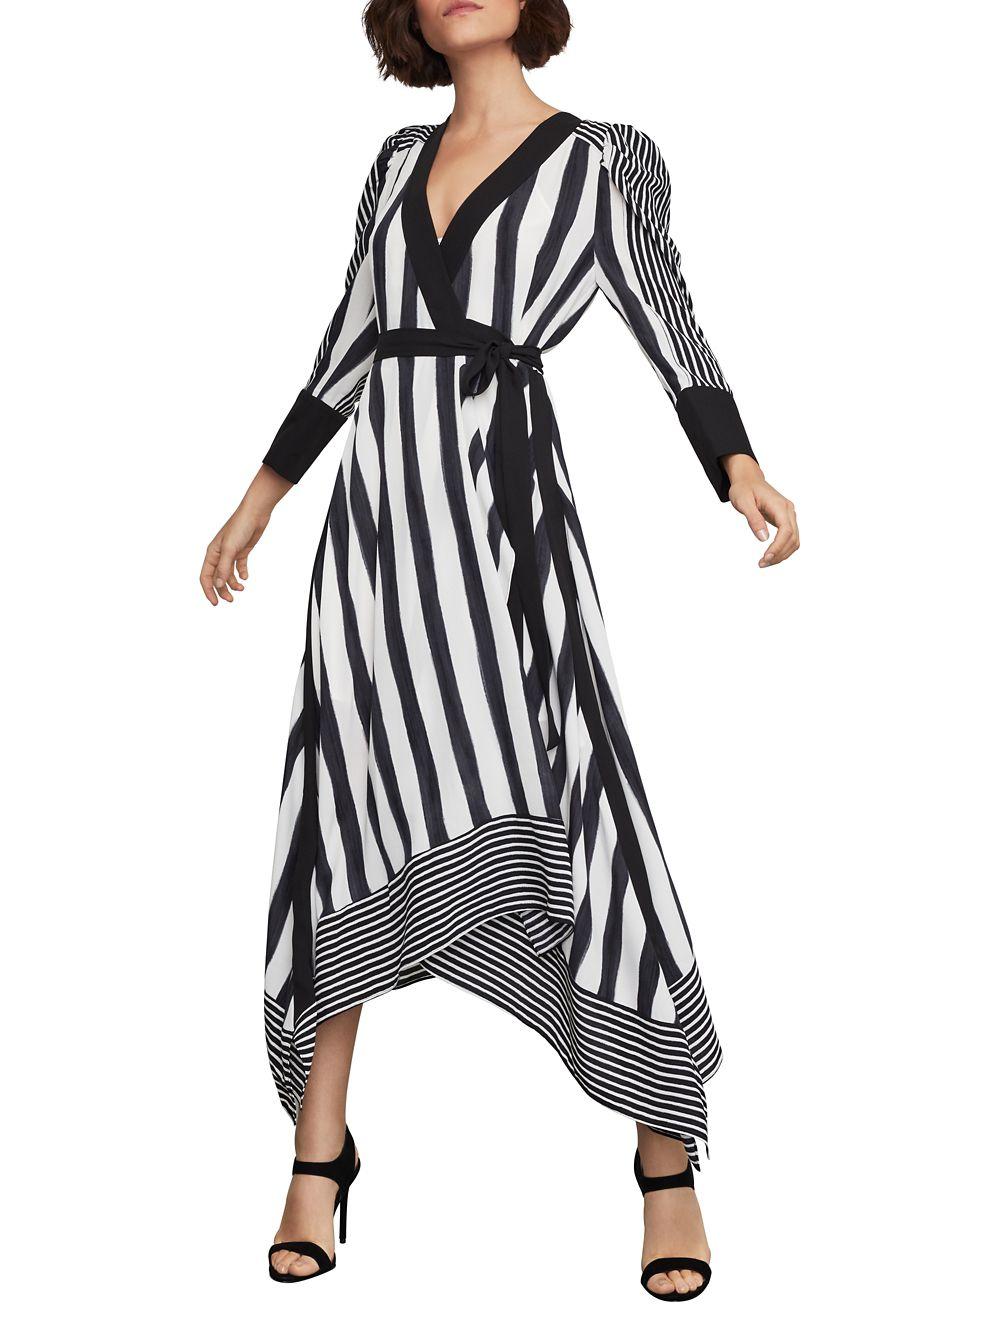 BCBG Max Azria Women/'s Asymmetric Striped Sleeveless Faux Wrap Mini Dress